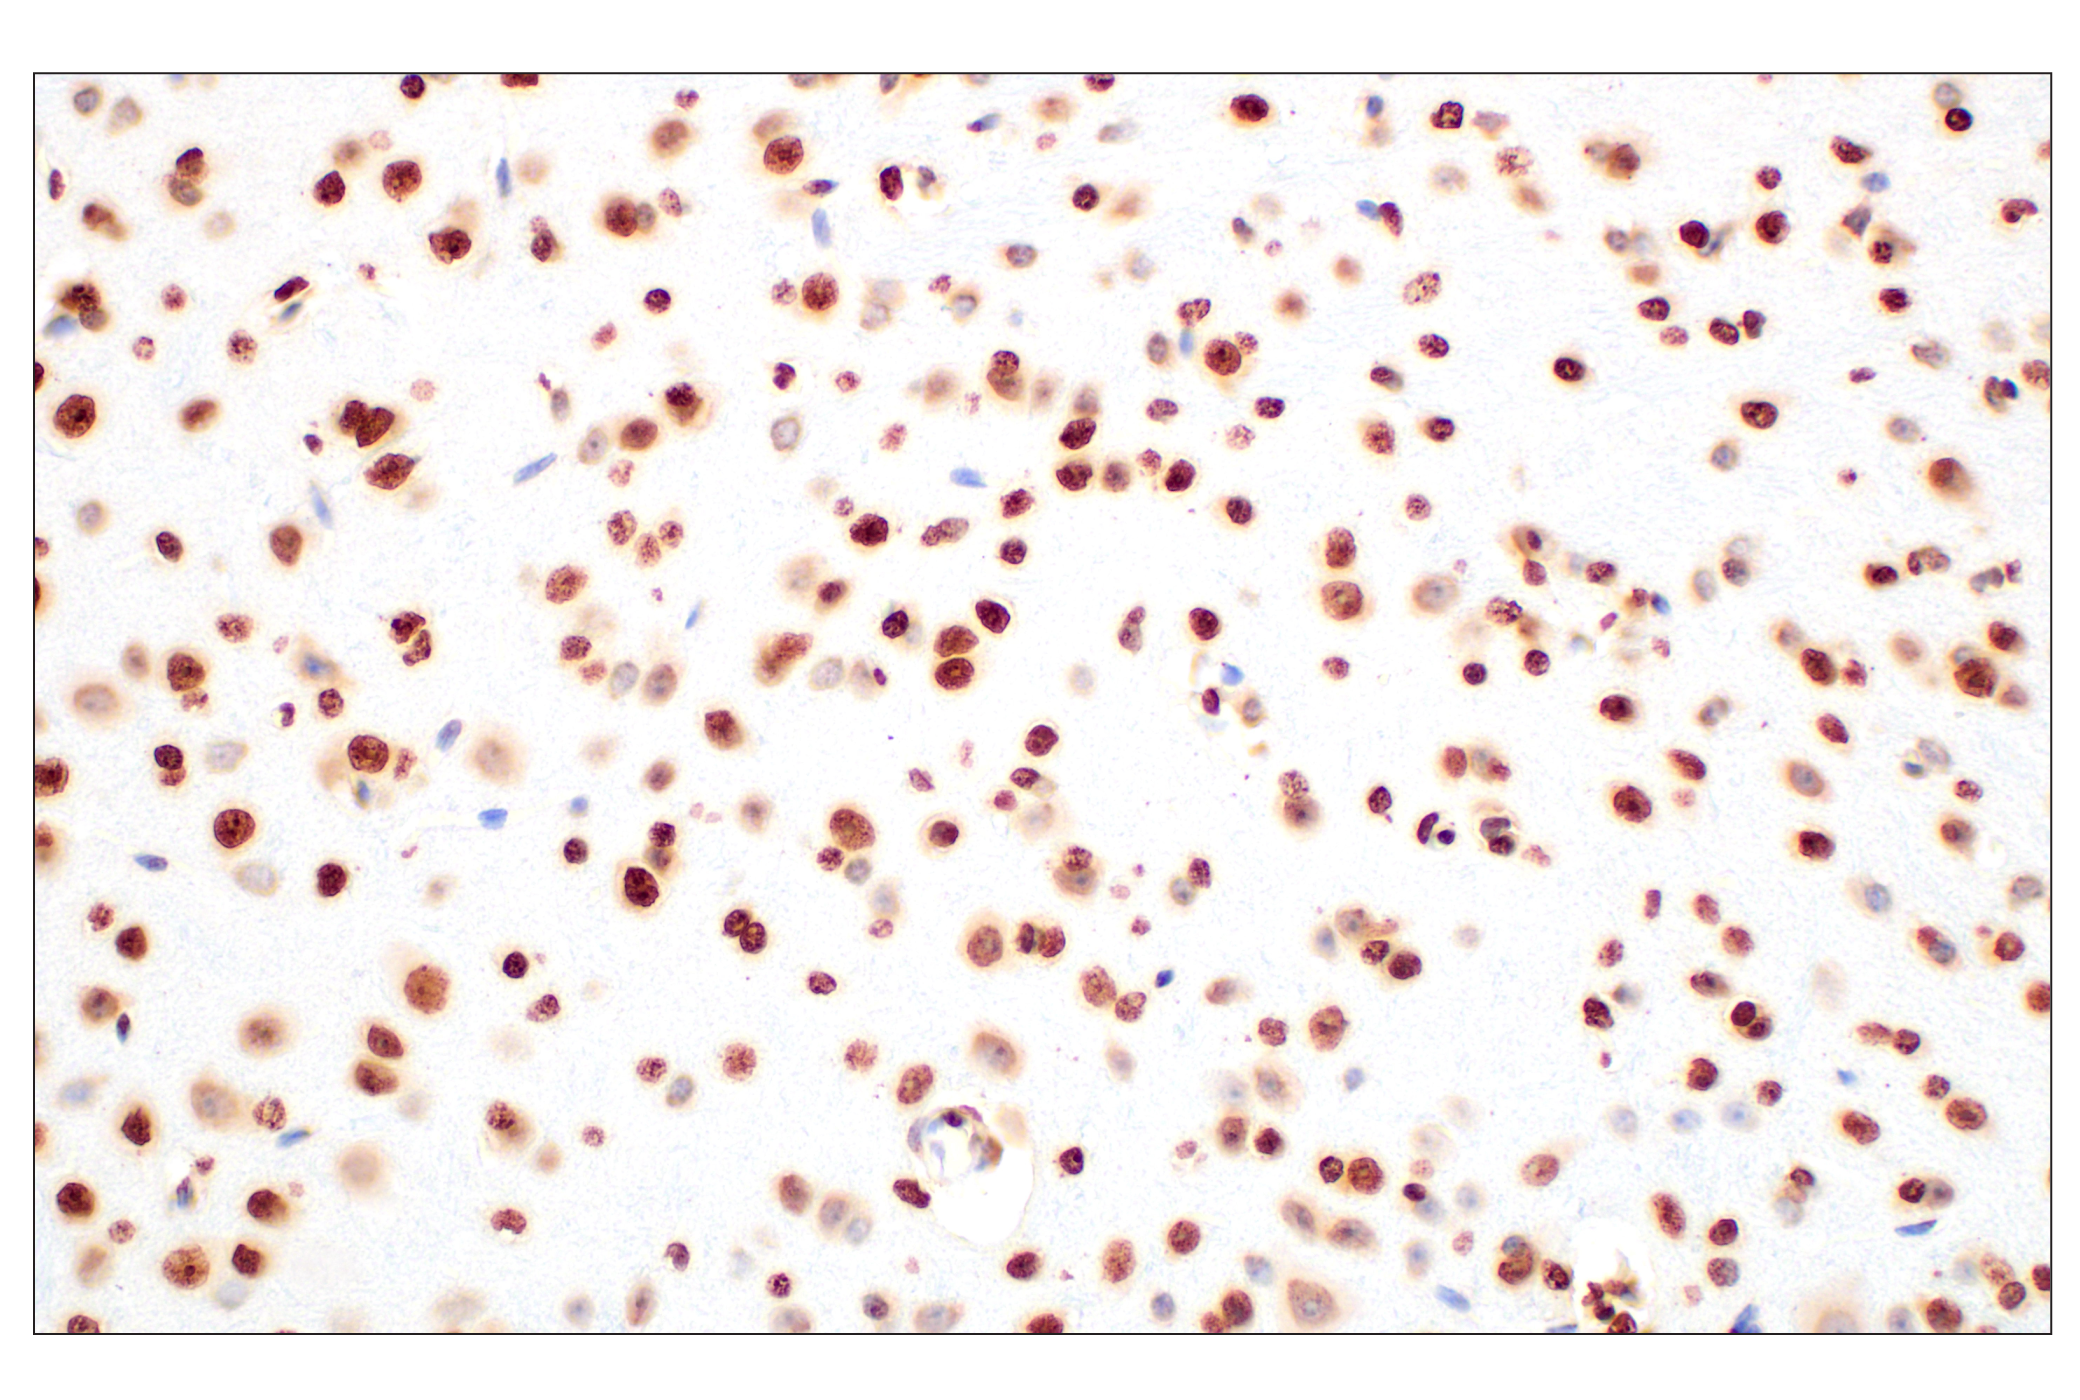  Image 10: PhosphoPlus® Histone H3 (Ser10) Antibody Duet